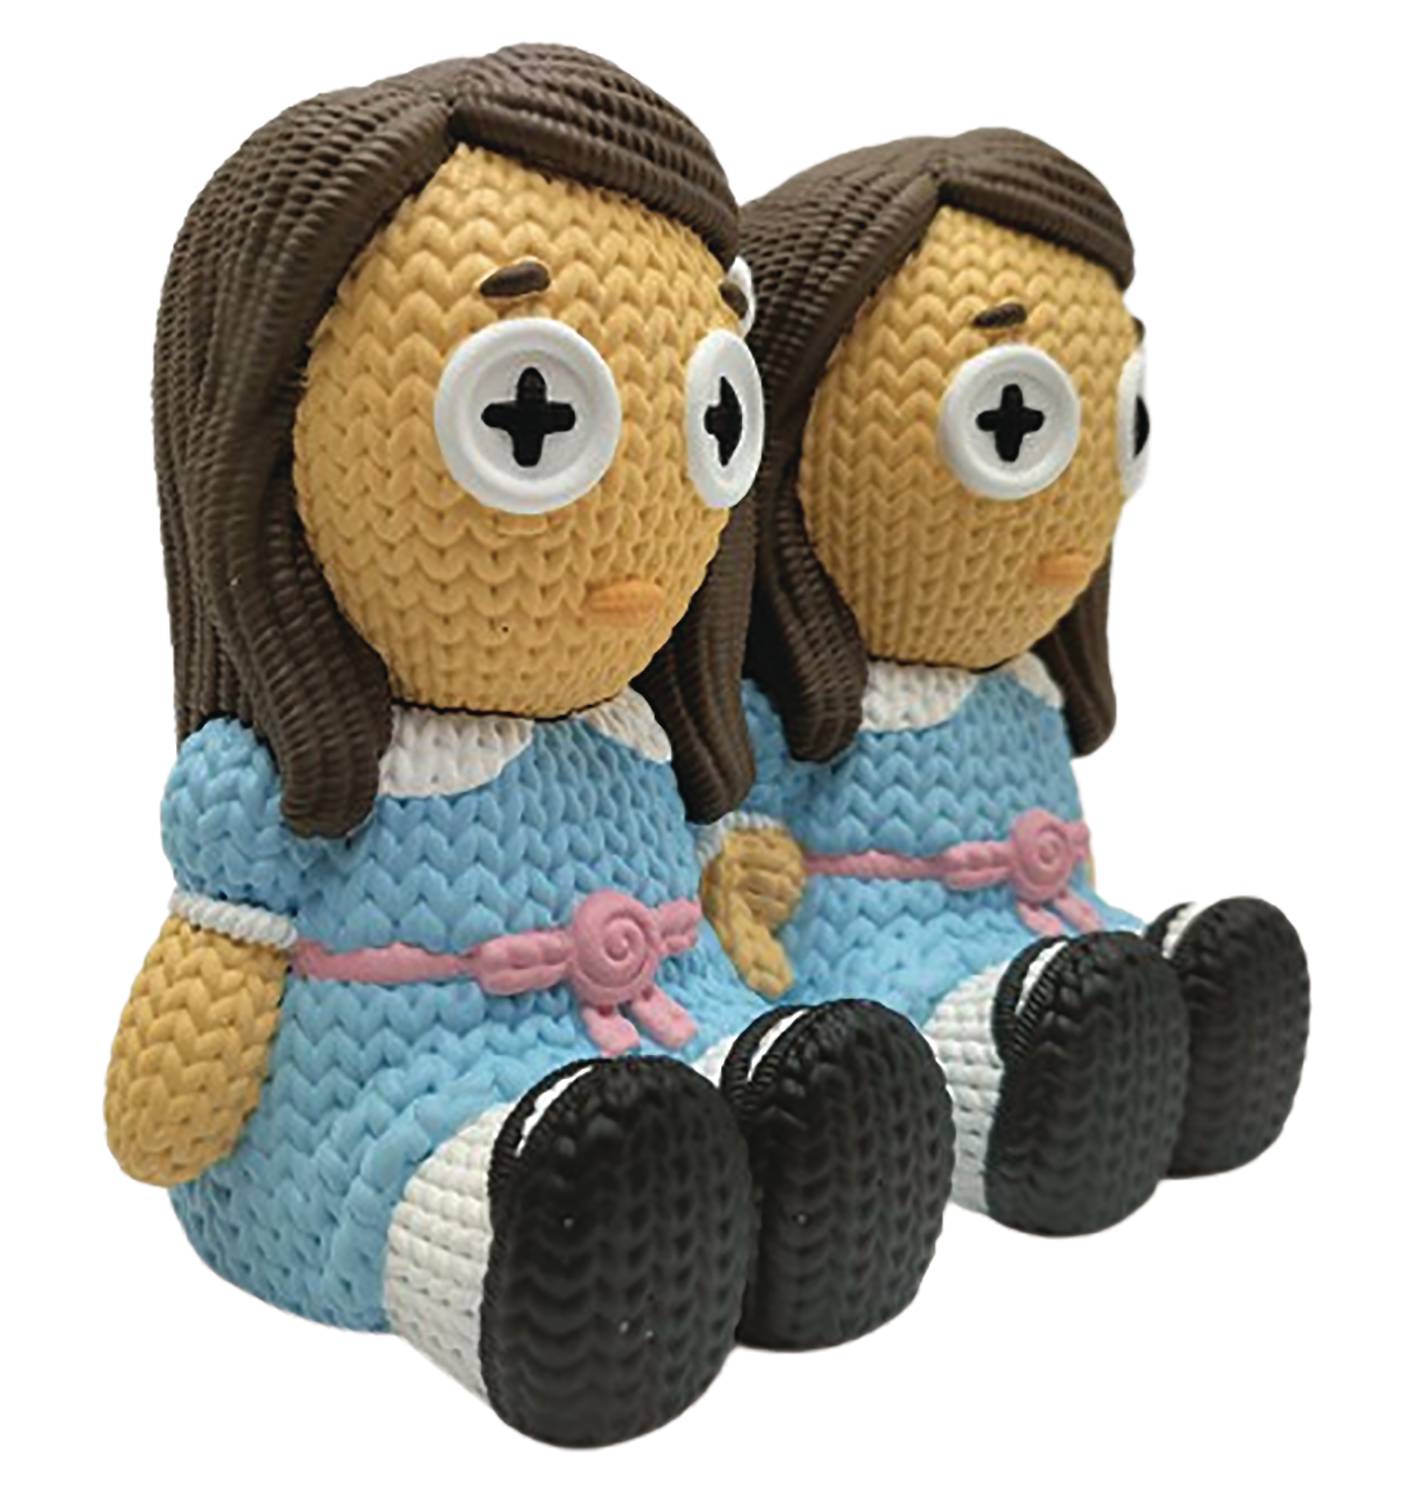 Handmade by Robots Doctor Sleep Grady Twins Figure